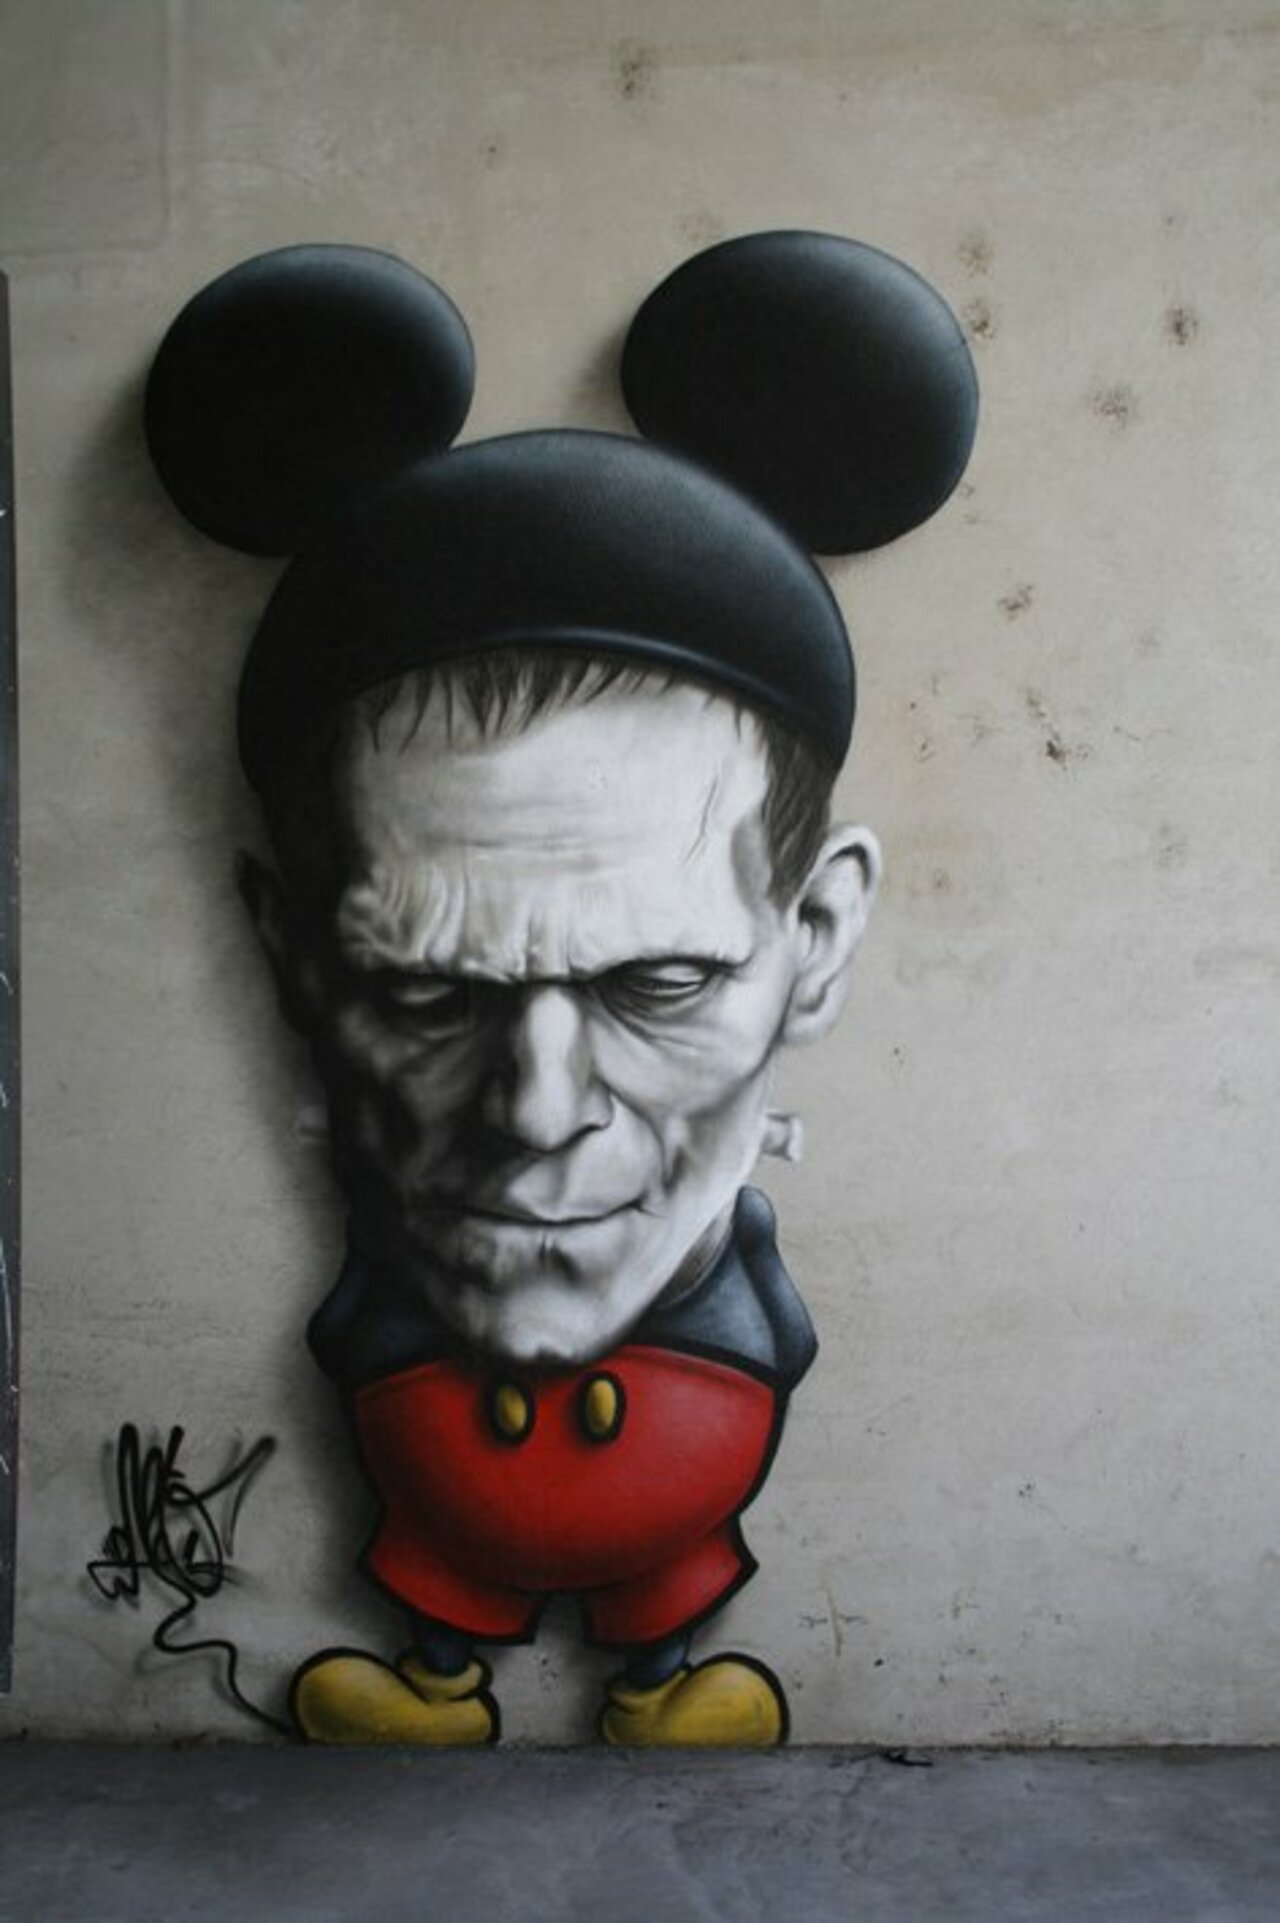 #Streetart #urbanart #graffiti #mural "Franken' Mouse 1" by #artist Cart'1 https://t.co/RW5Ovfvcc3